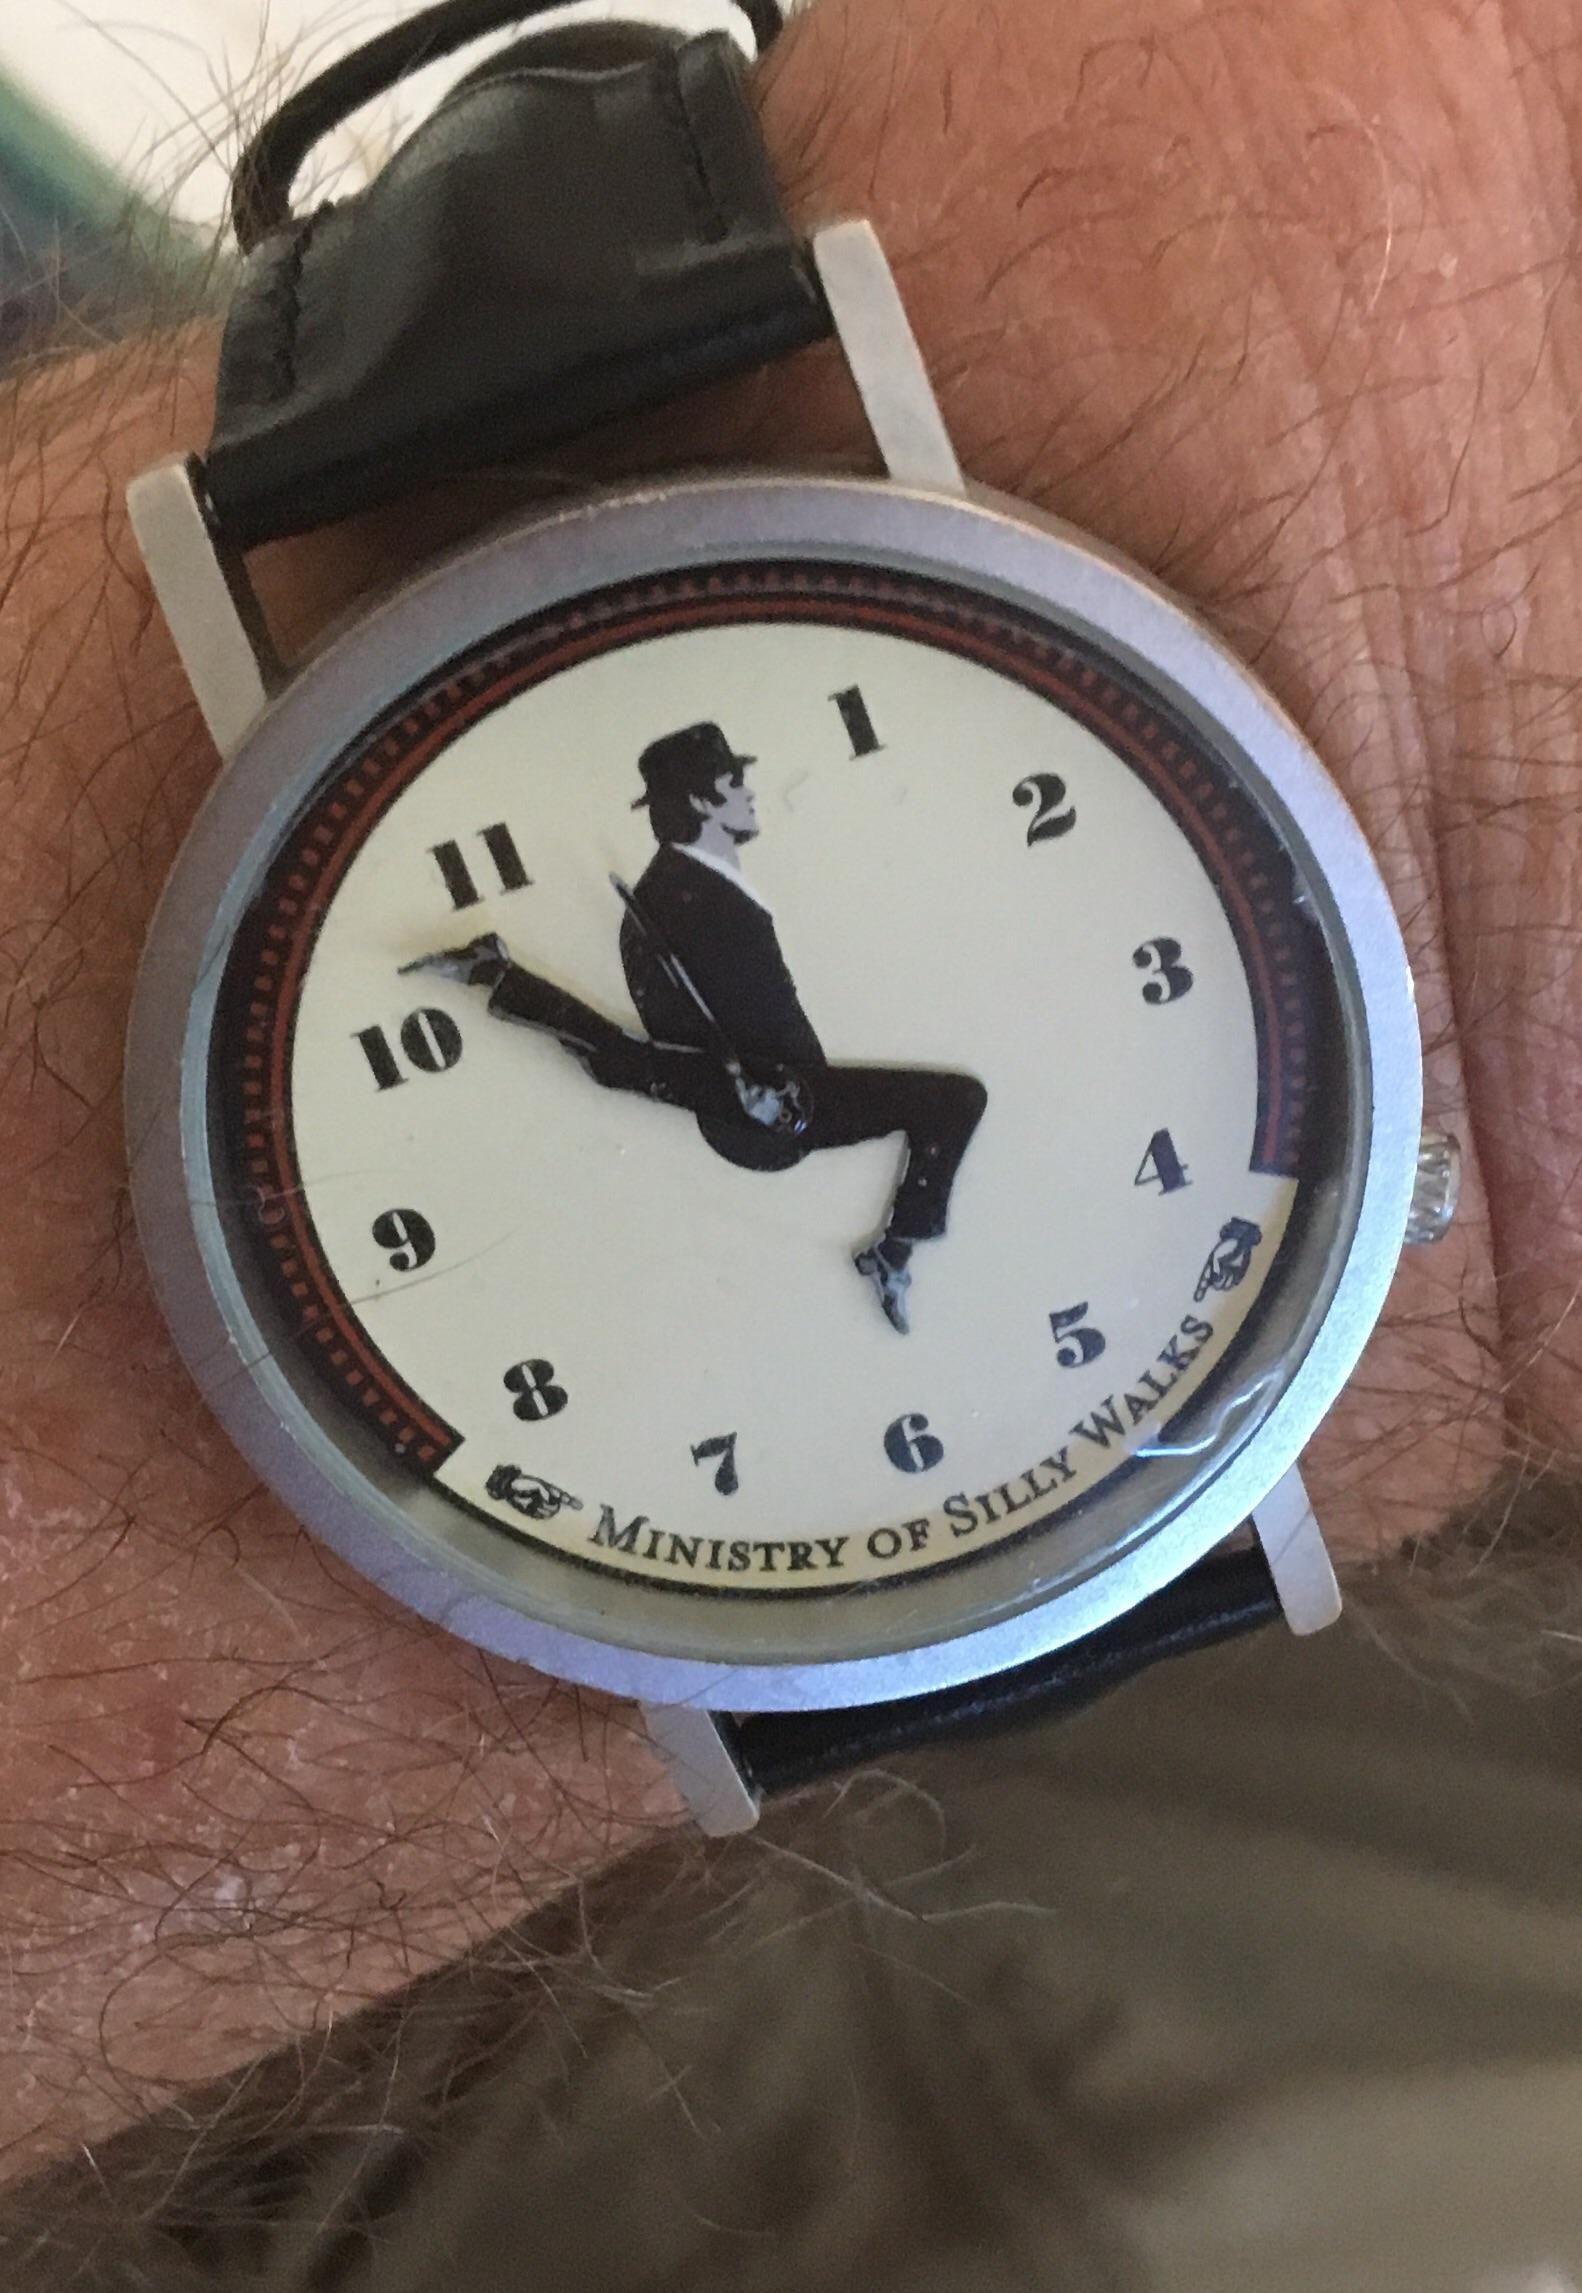 My dad's watch...